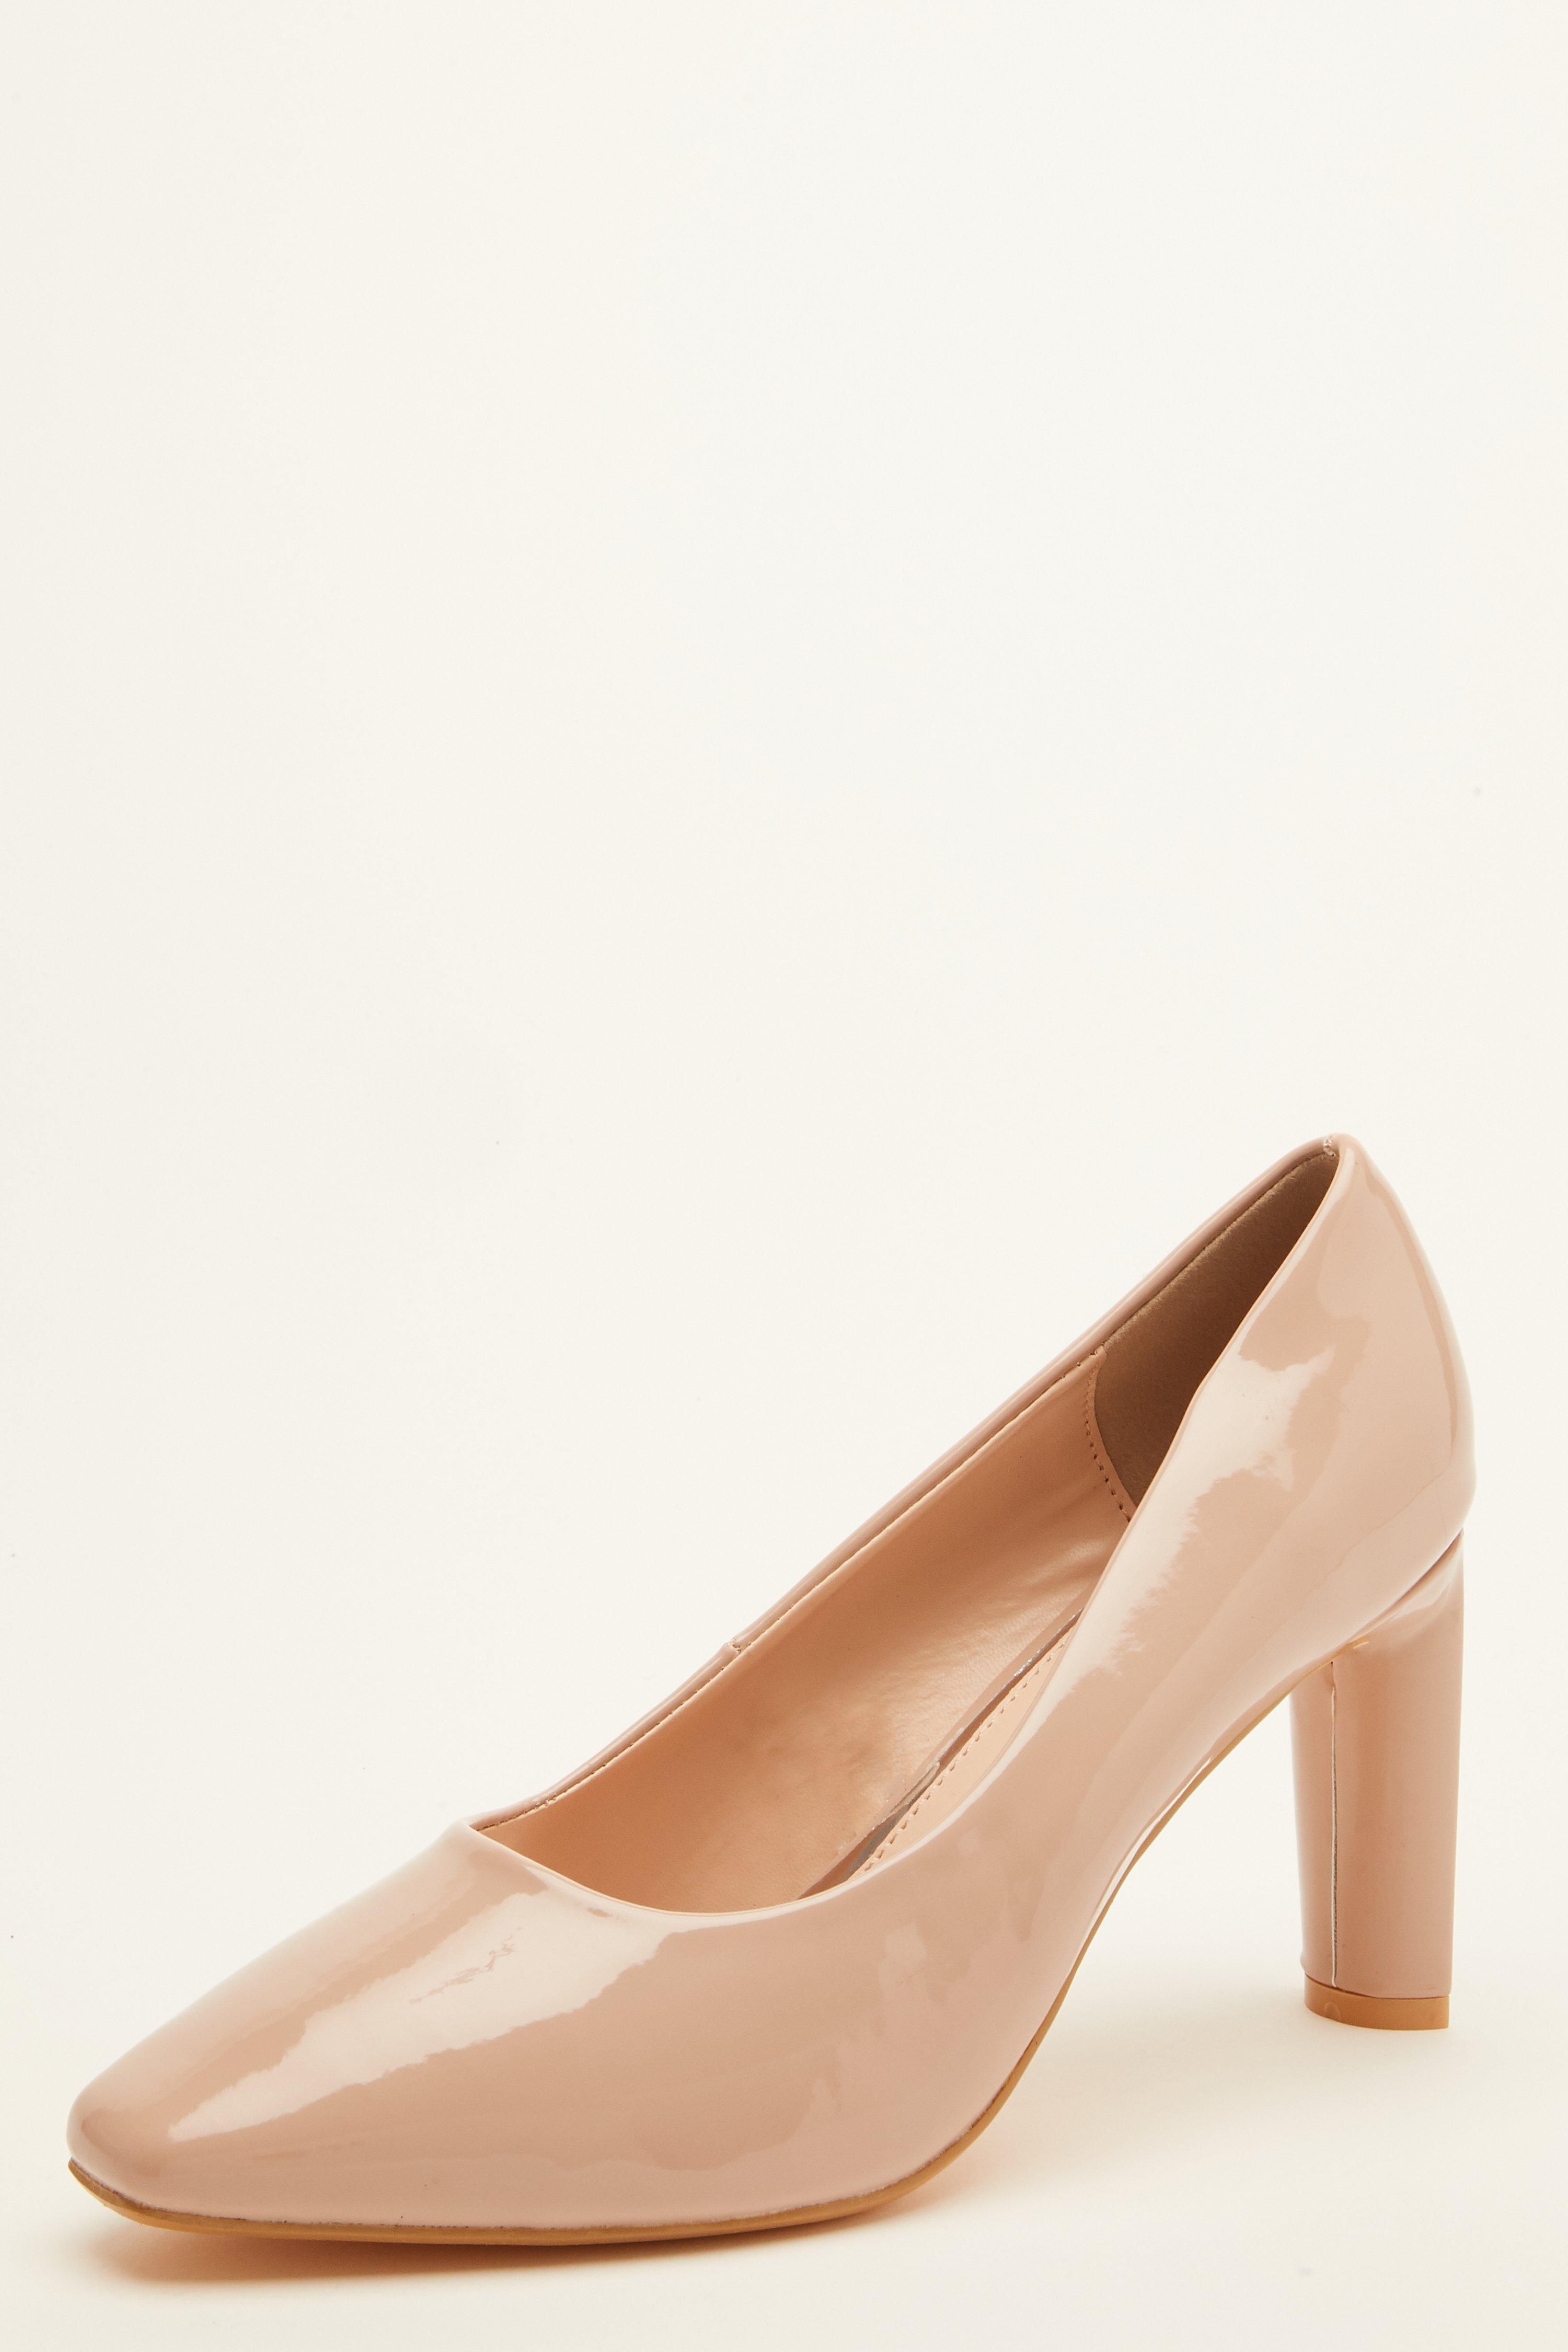 - Court style  - Patent finish  - Closed toe style  - Thin heel  - Heel height: 3.5